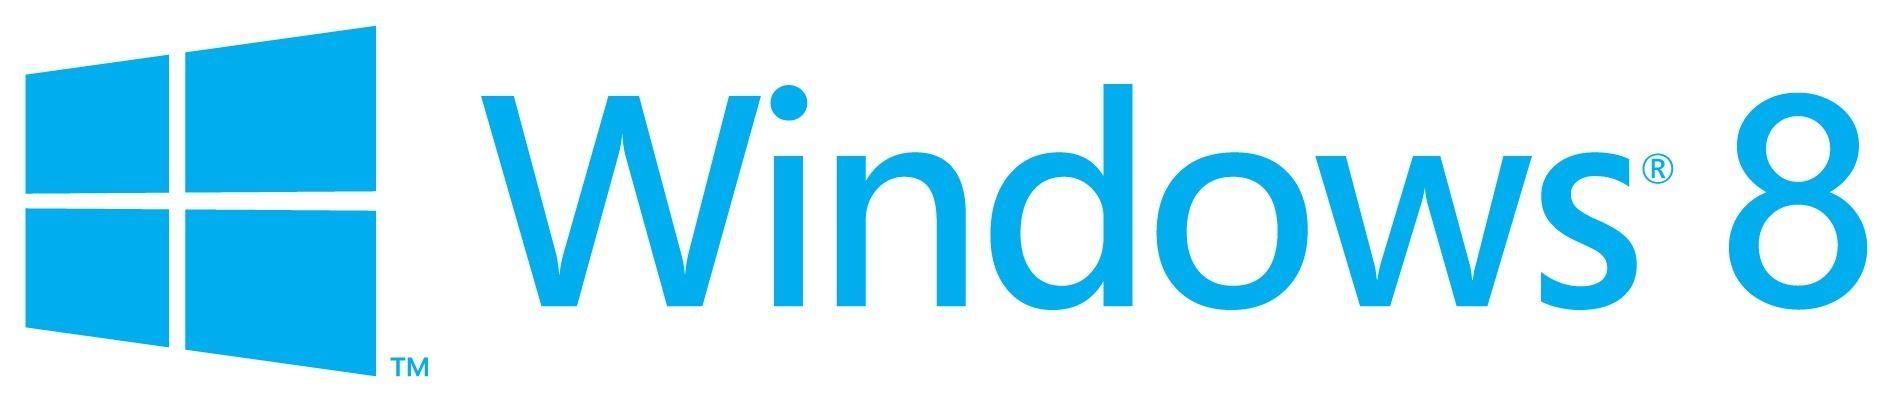 Windows 8 Logo - New Windows 8 Logo Is Pure Genius | PCWorld